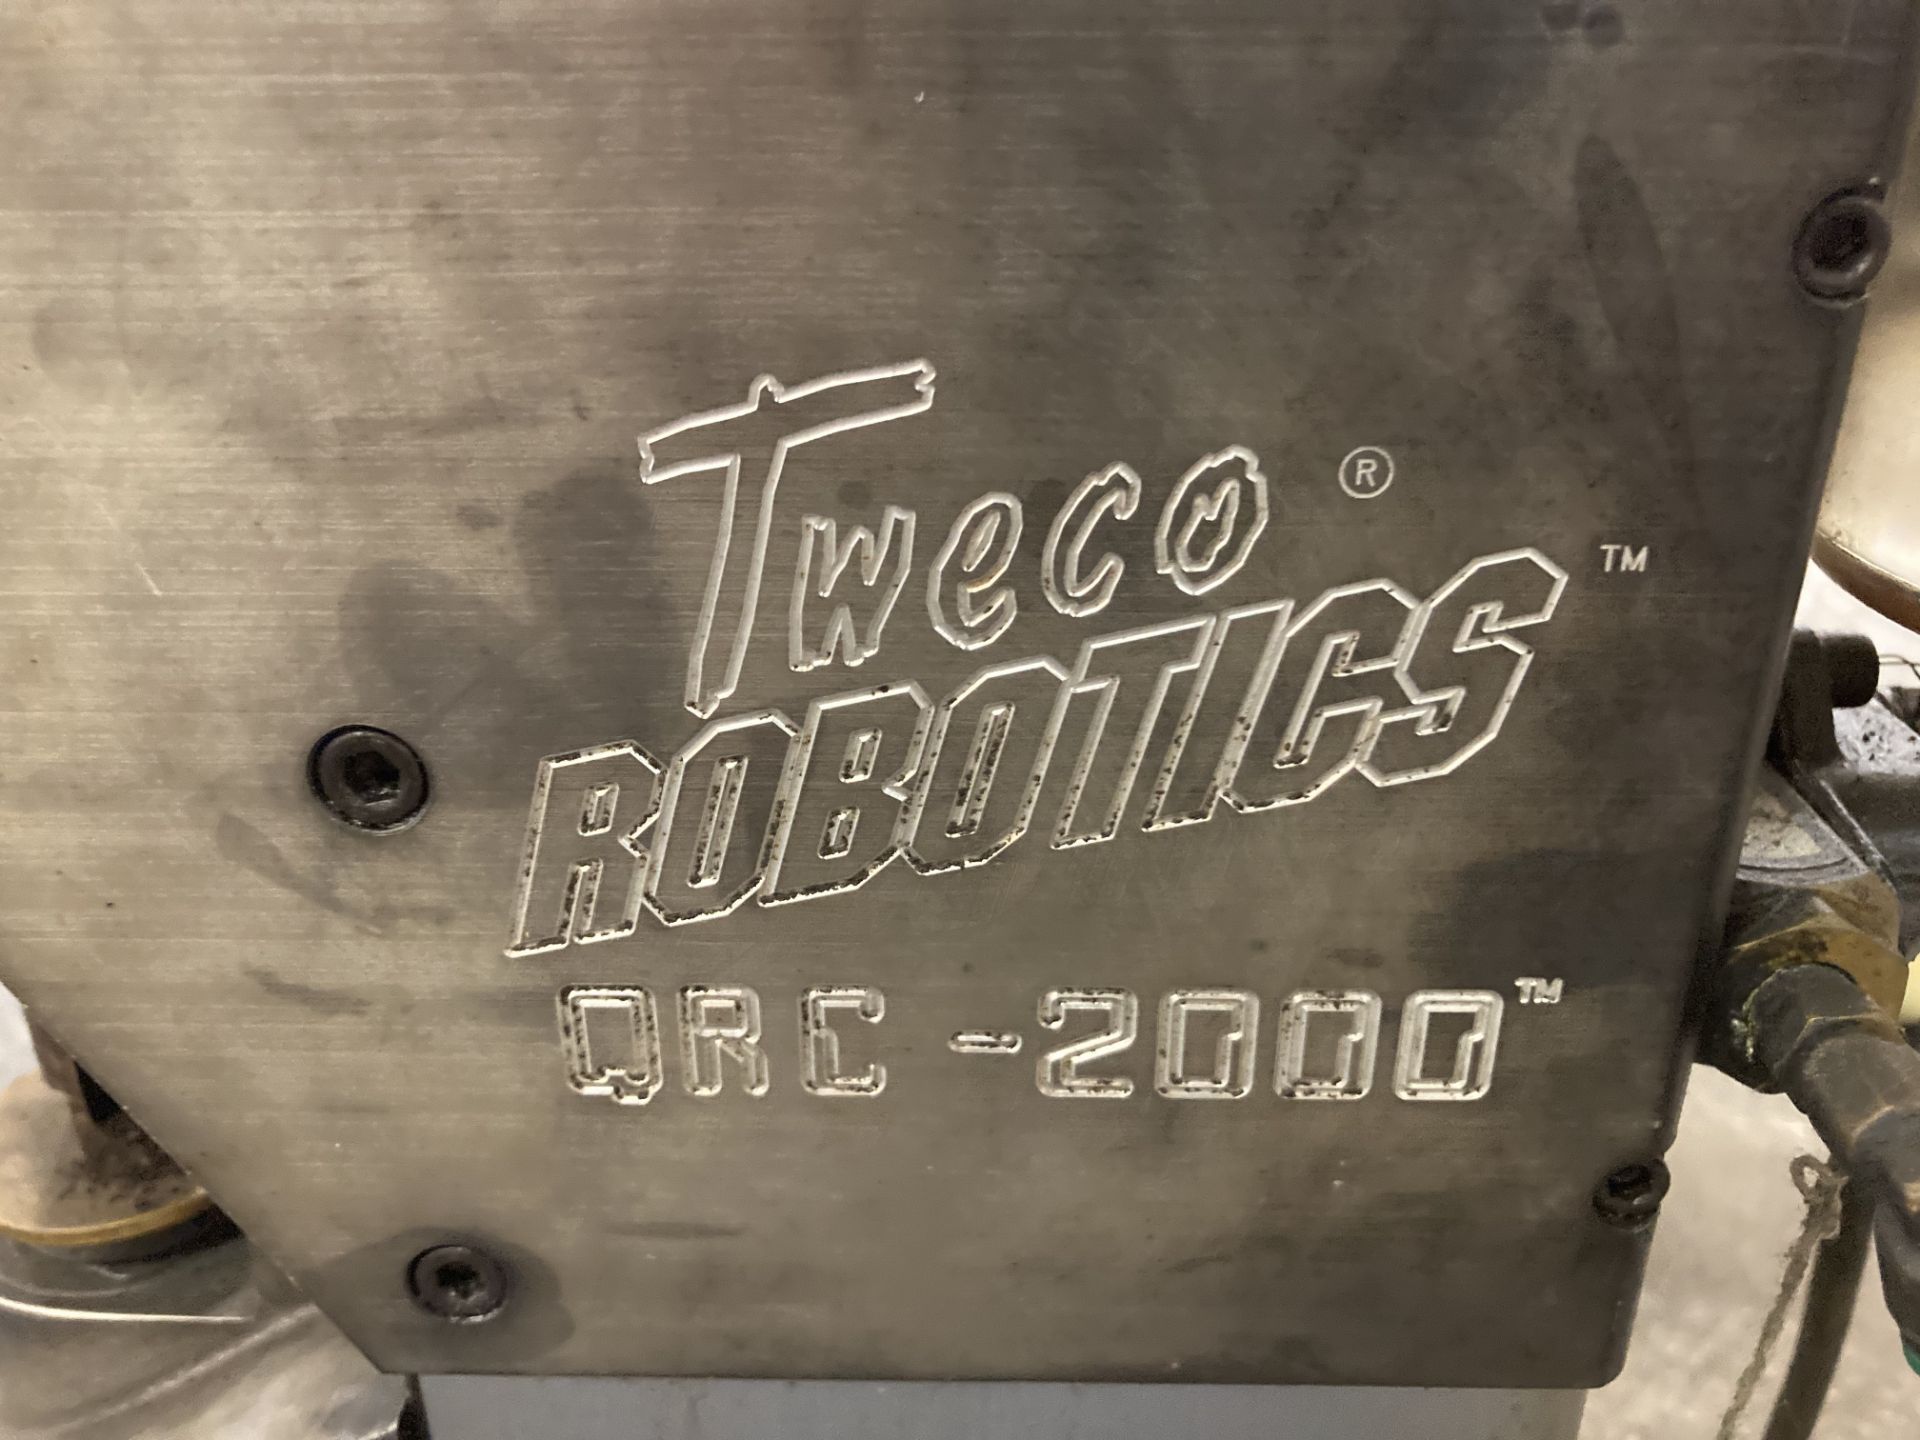 (5) Tweco Robotics Nozzle Cleaning Station, M/N: QRC-2000 - Image 5 of 6